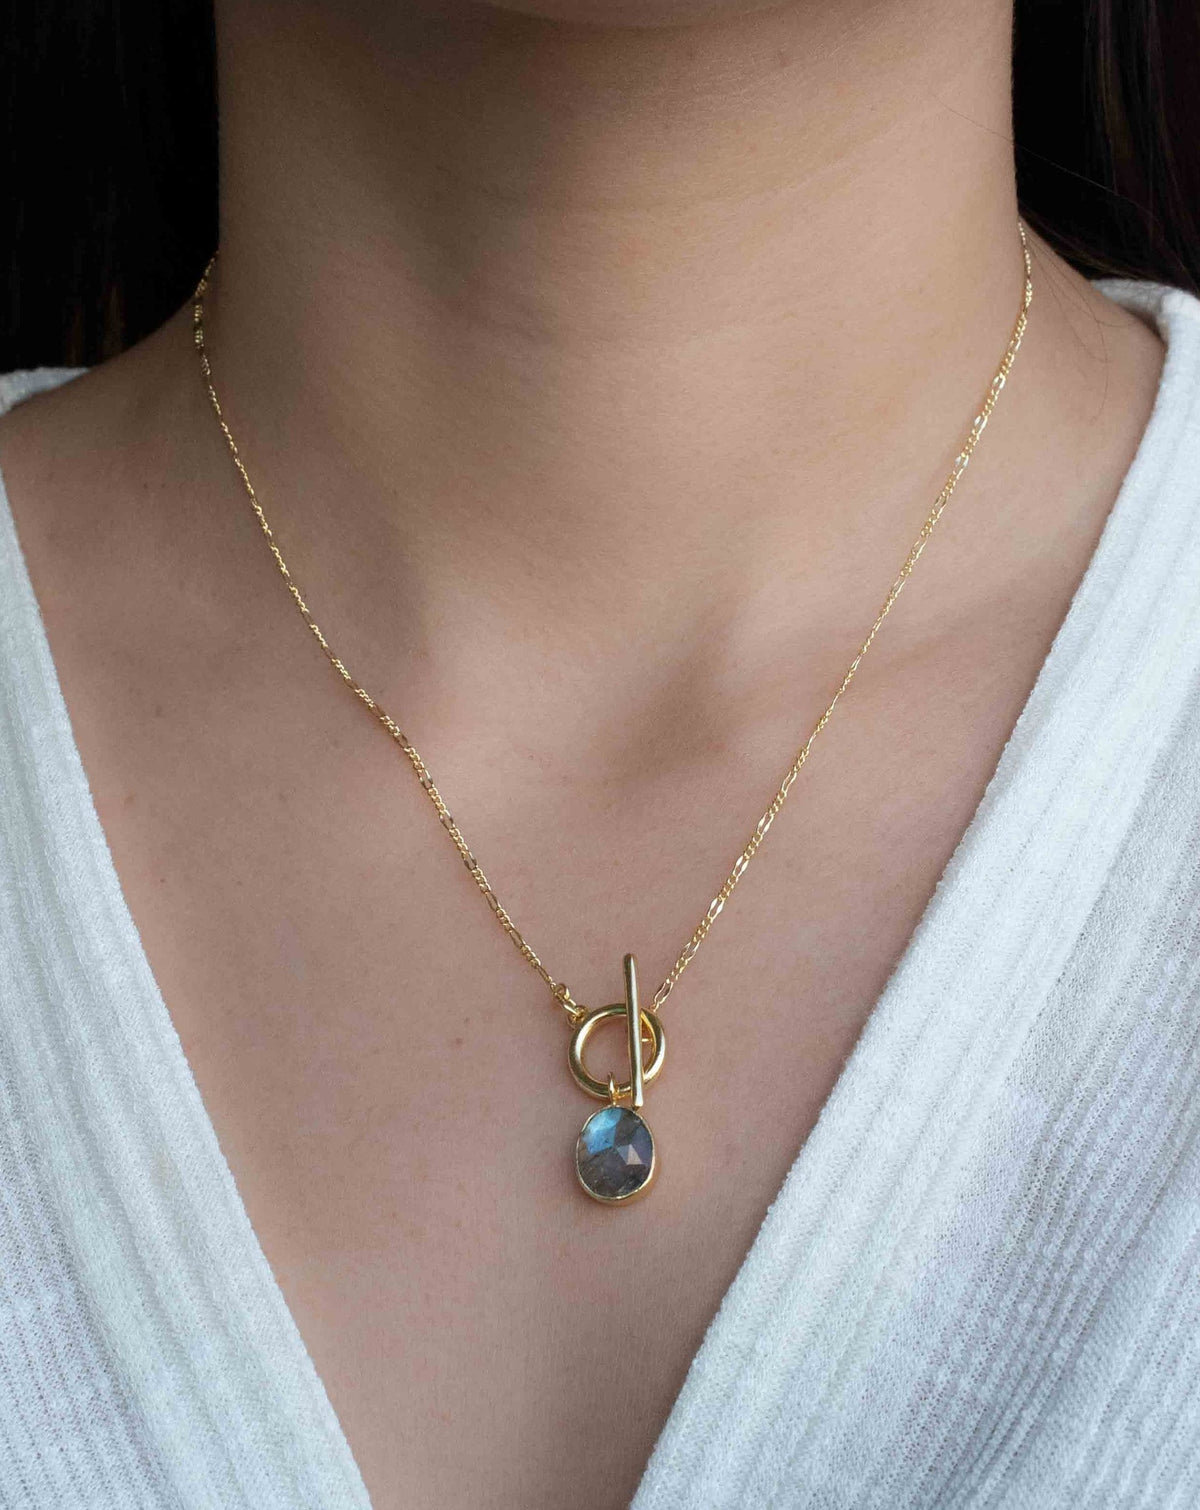 Moonstone, Labradorite or Rose Quartz Necklace * Gold Plated 18k * Gemstone * Modern * Layered *BJN181